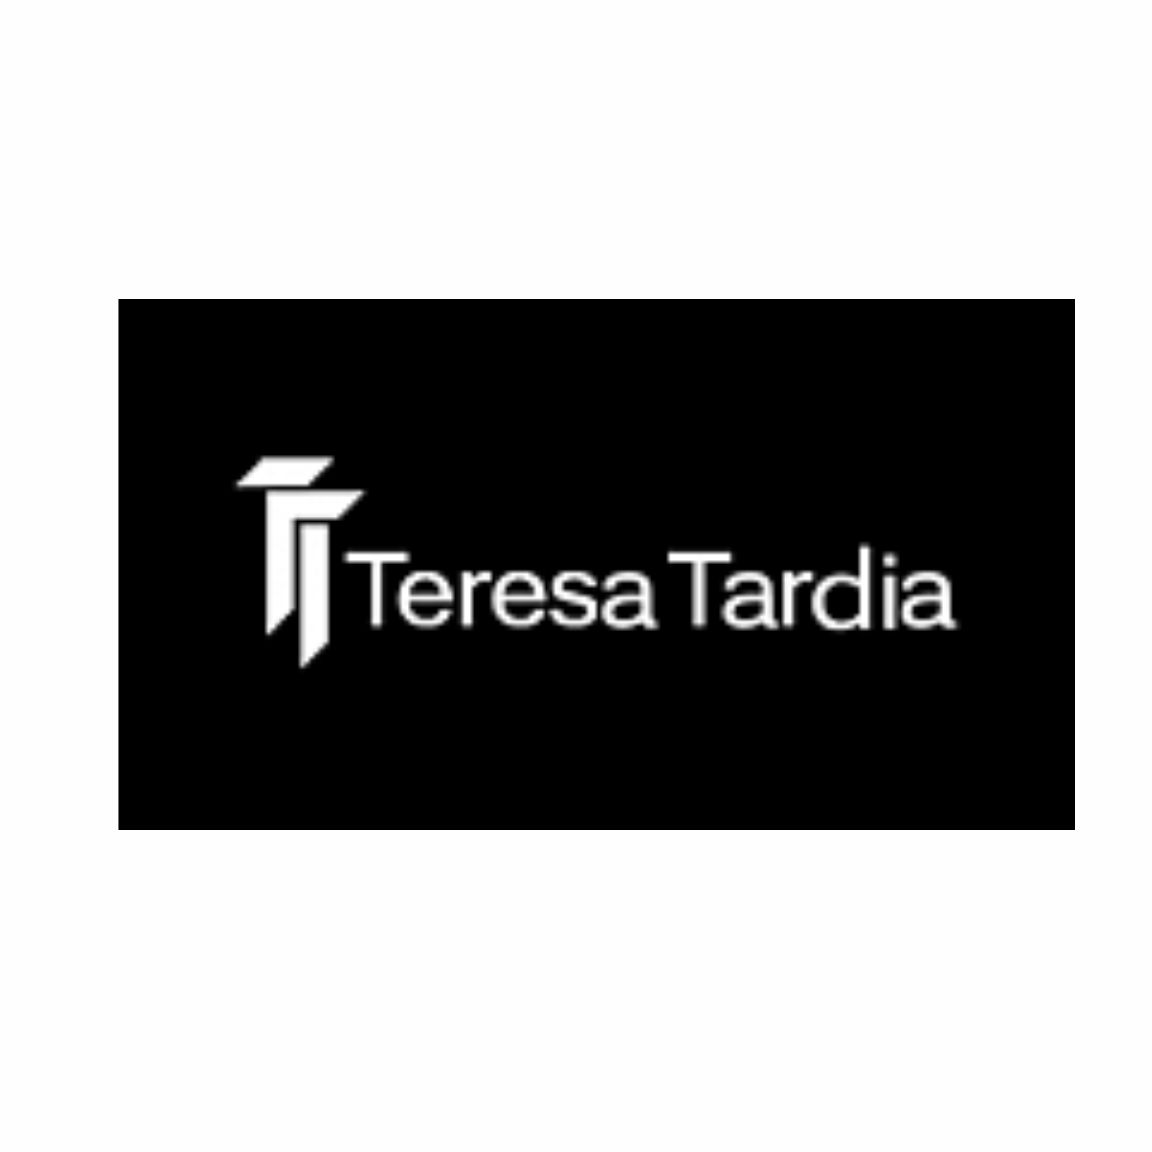 Teresa Tardia